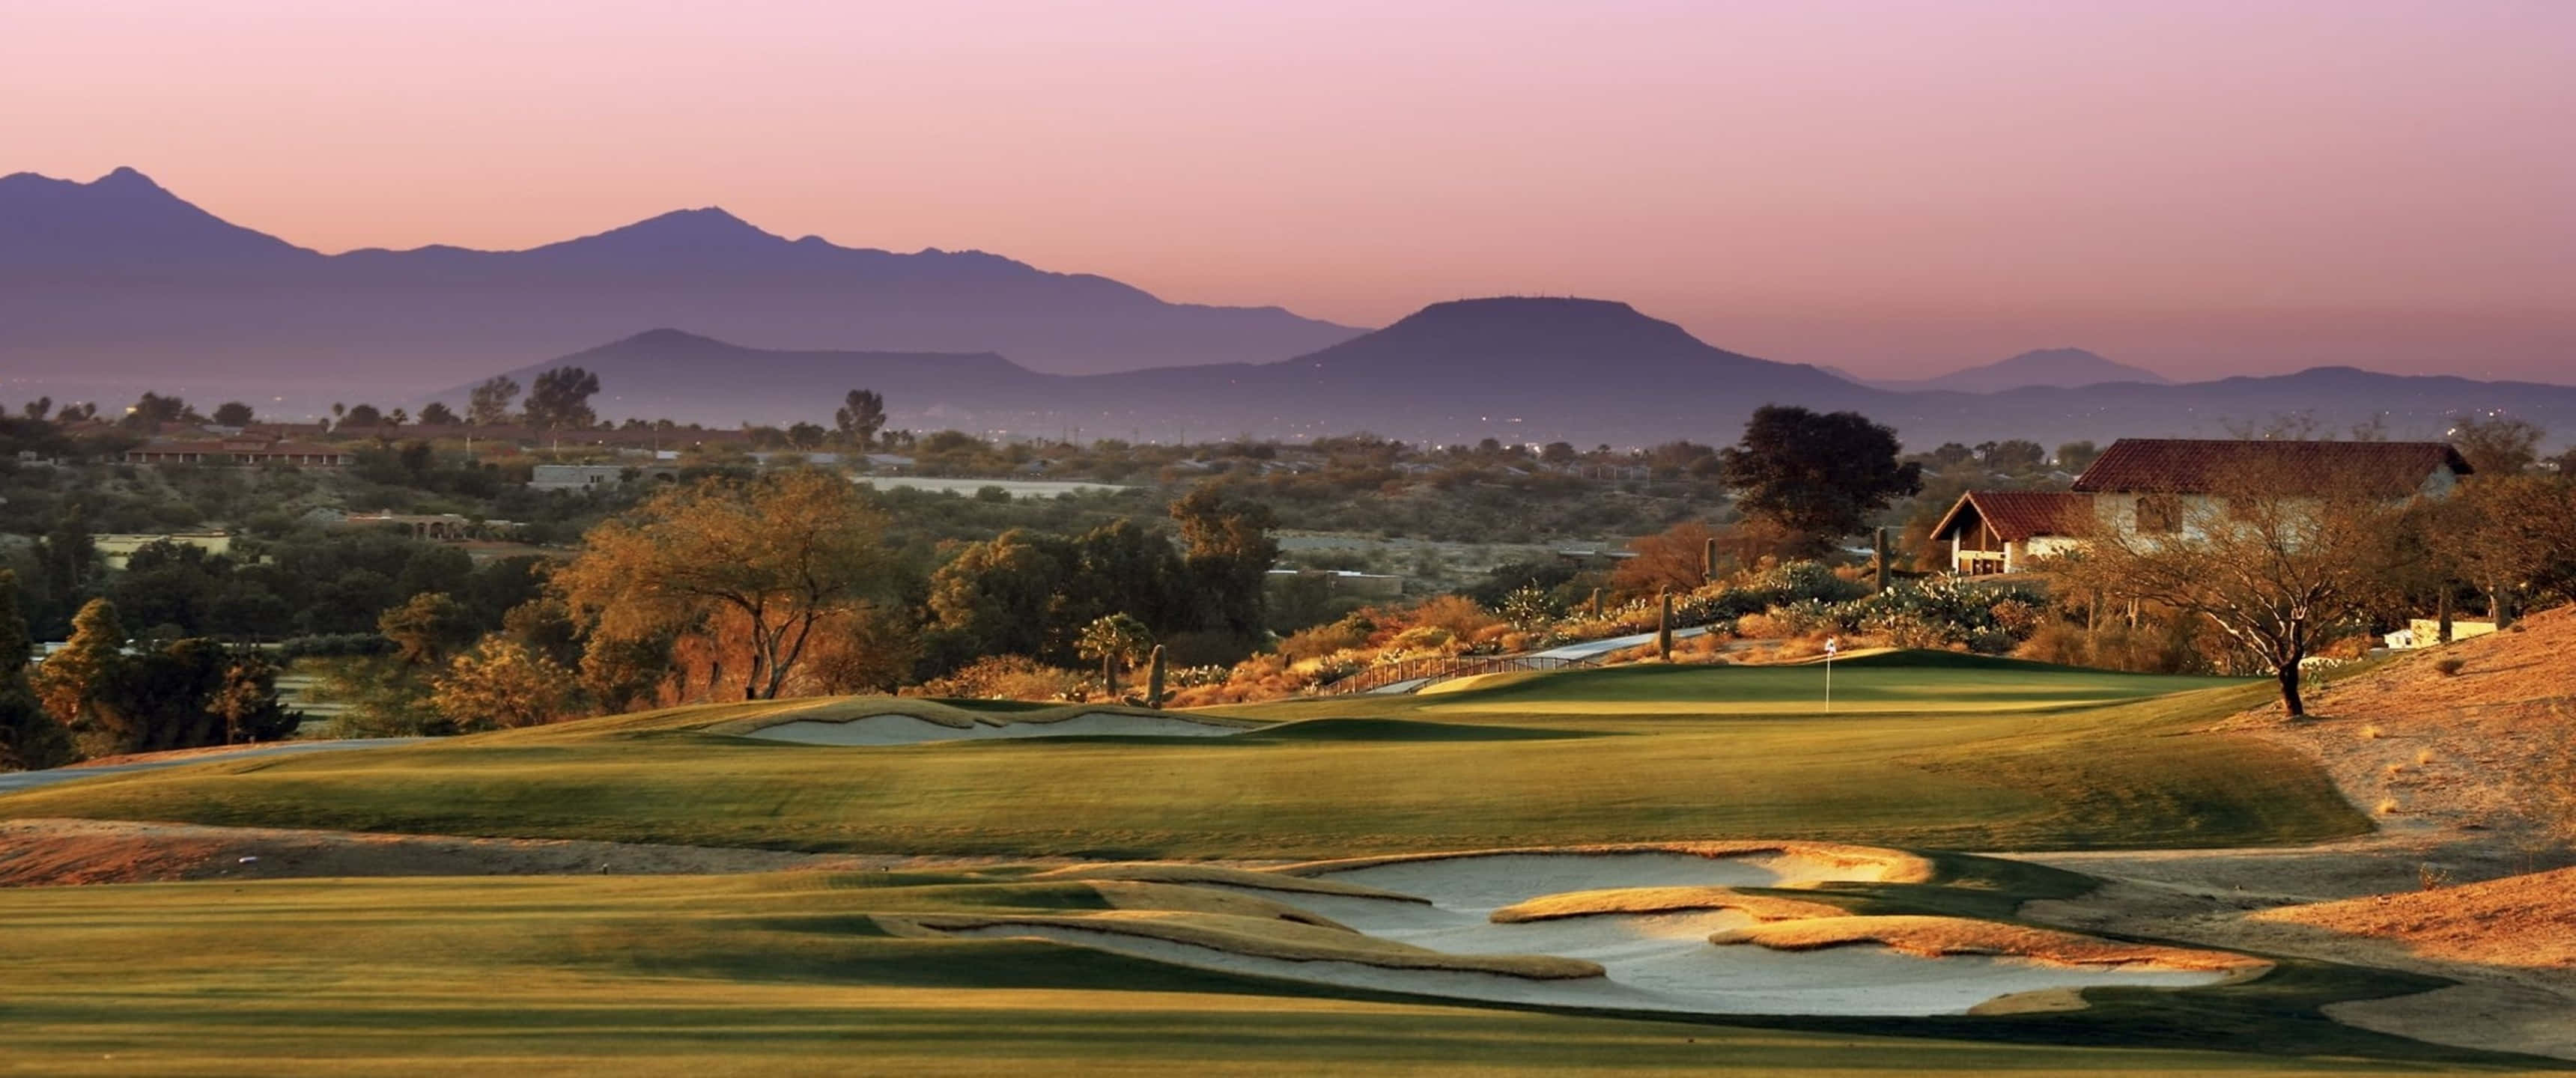 Caption: Scenic Omni Tucson Golf Course Landscape at Dusk